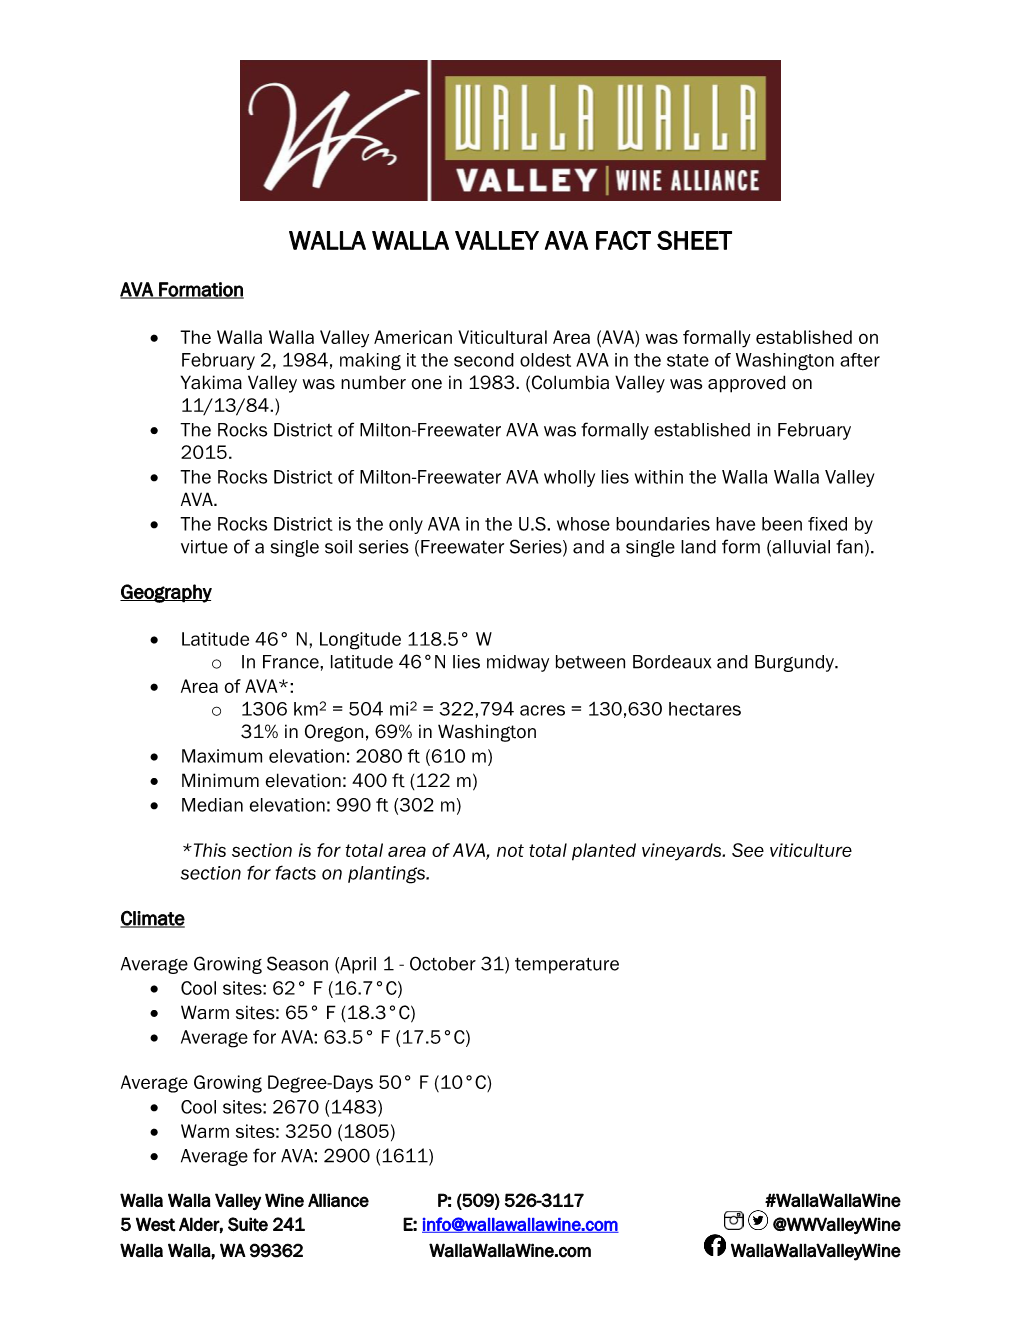 Walla Walla Valley Ava Fact Sheet